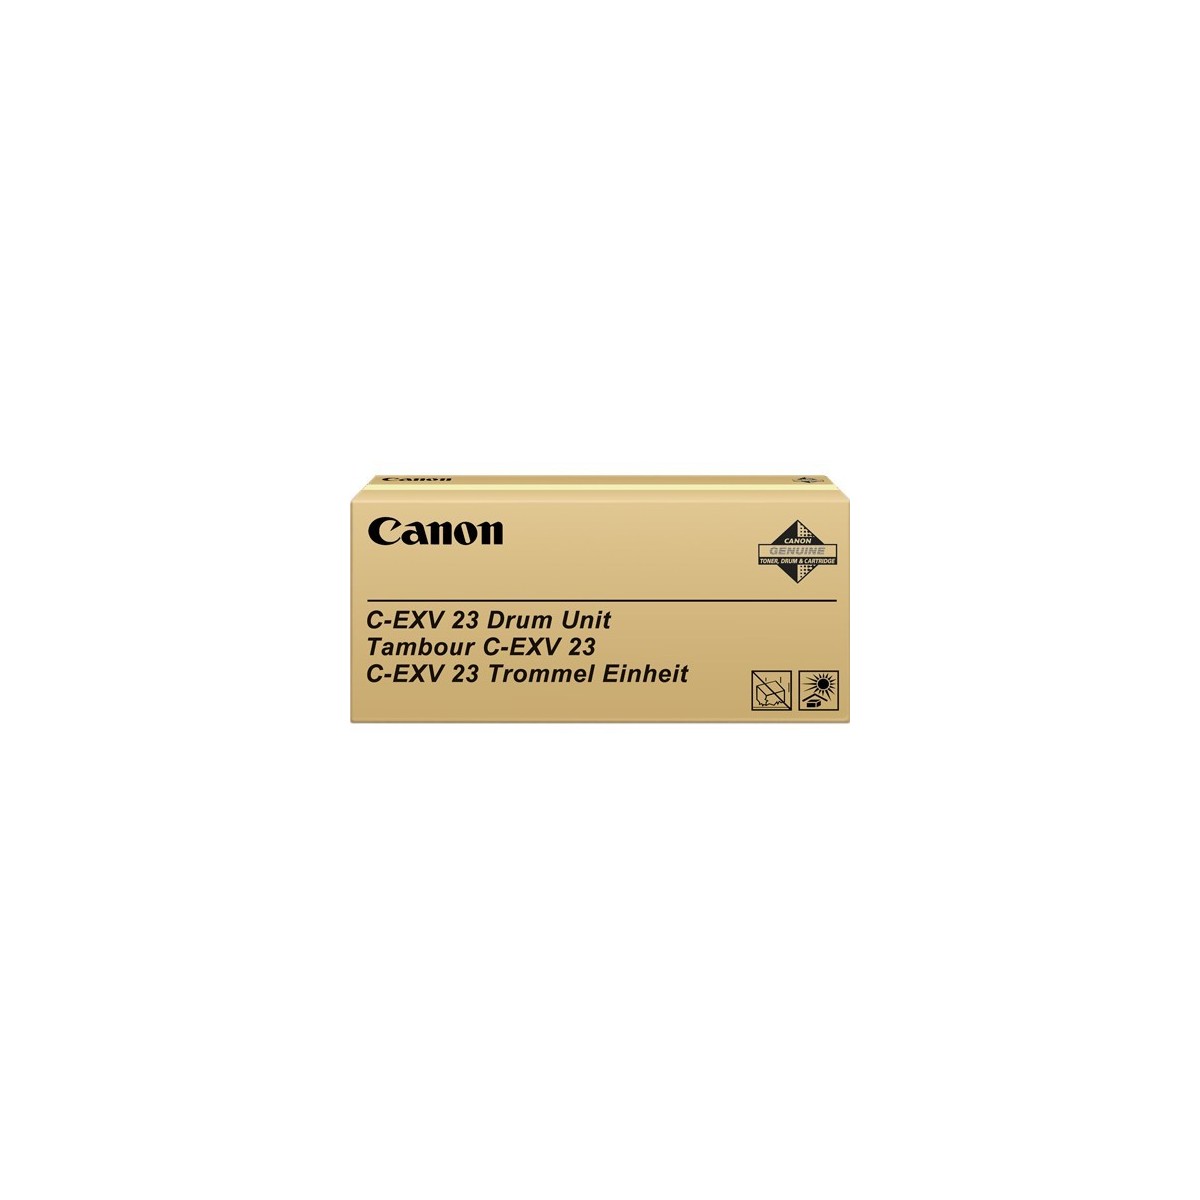 Canon C-EXV 23 - Original - Canon iR20xx - 61000 pages - Black - Black